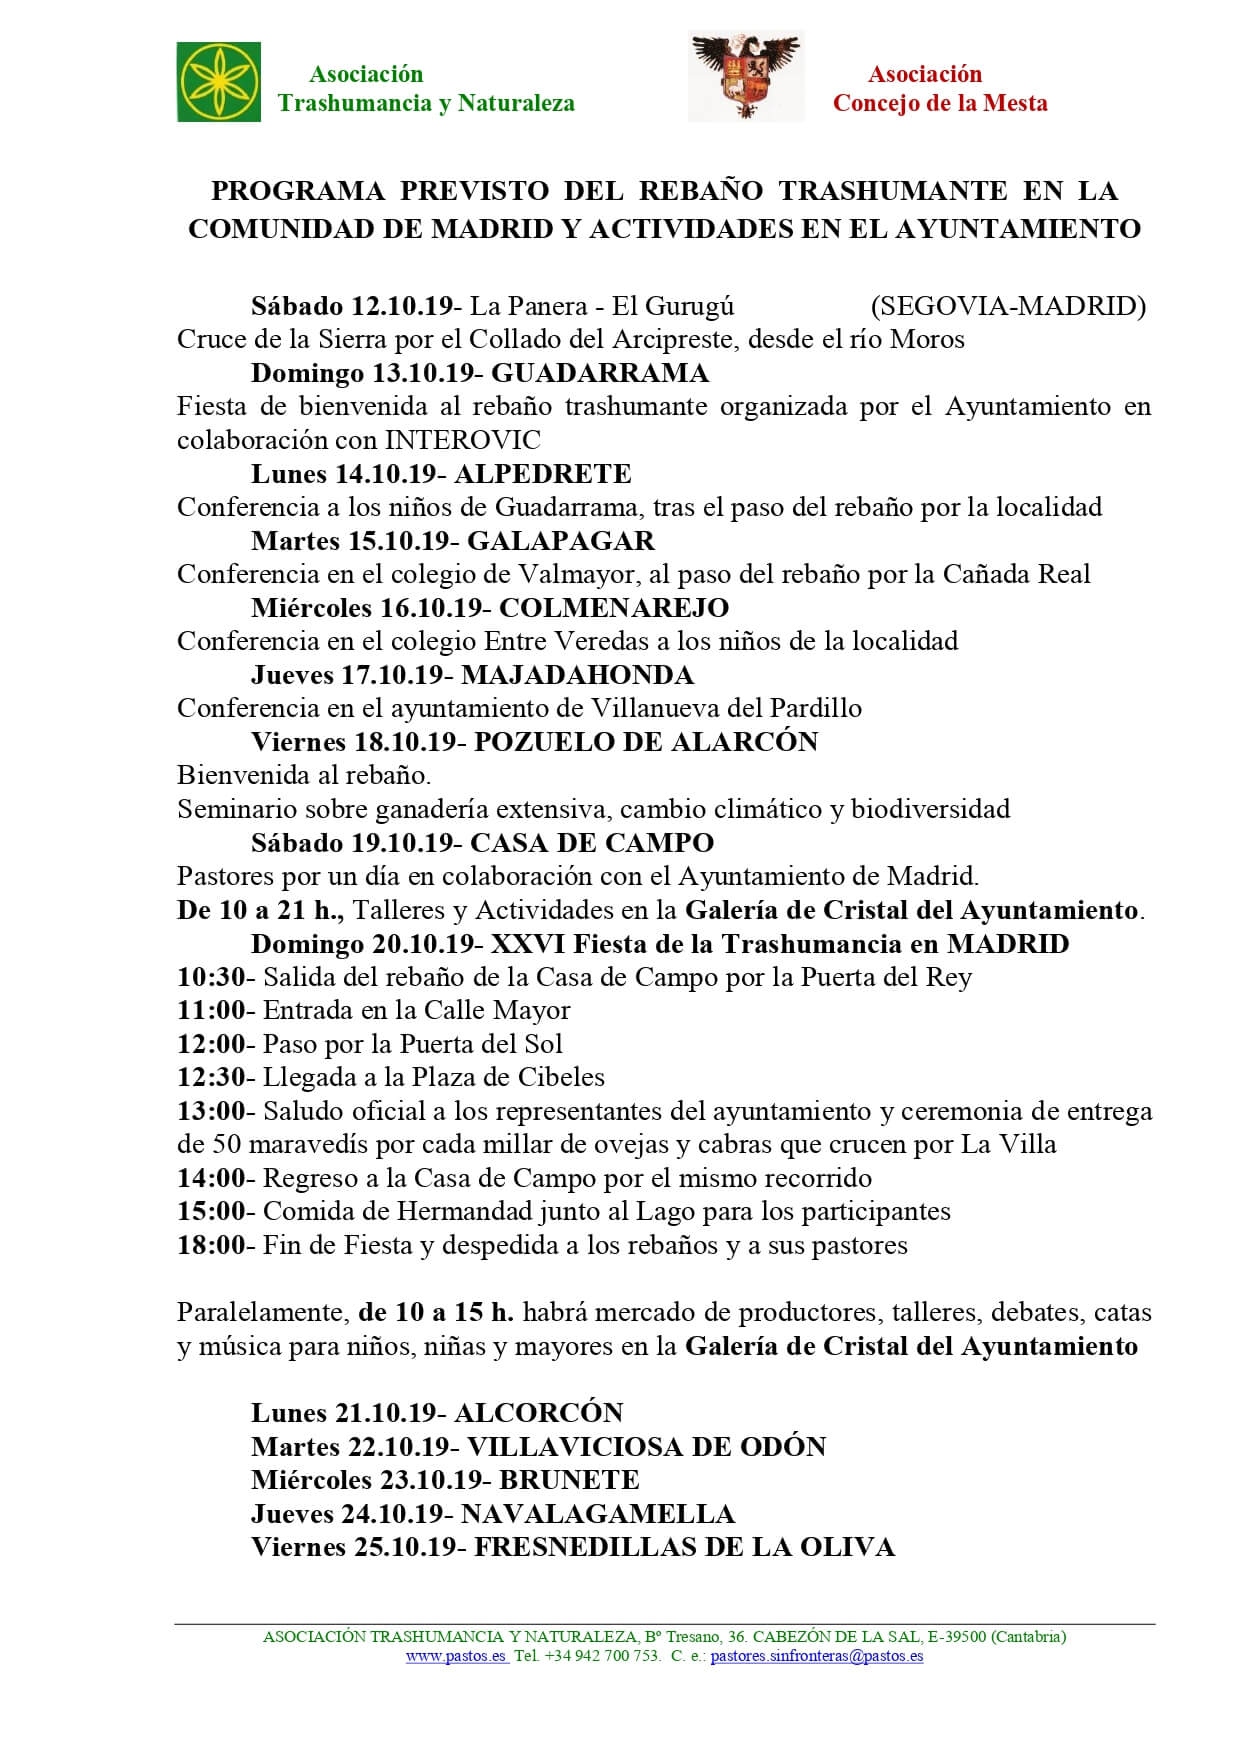 PROGRAMA PREVISTO TRASHUMANCIA EN MADRID 12-20.10. 2019_page-0001 (1)